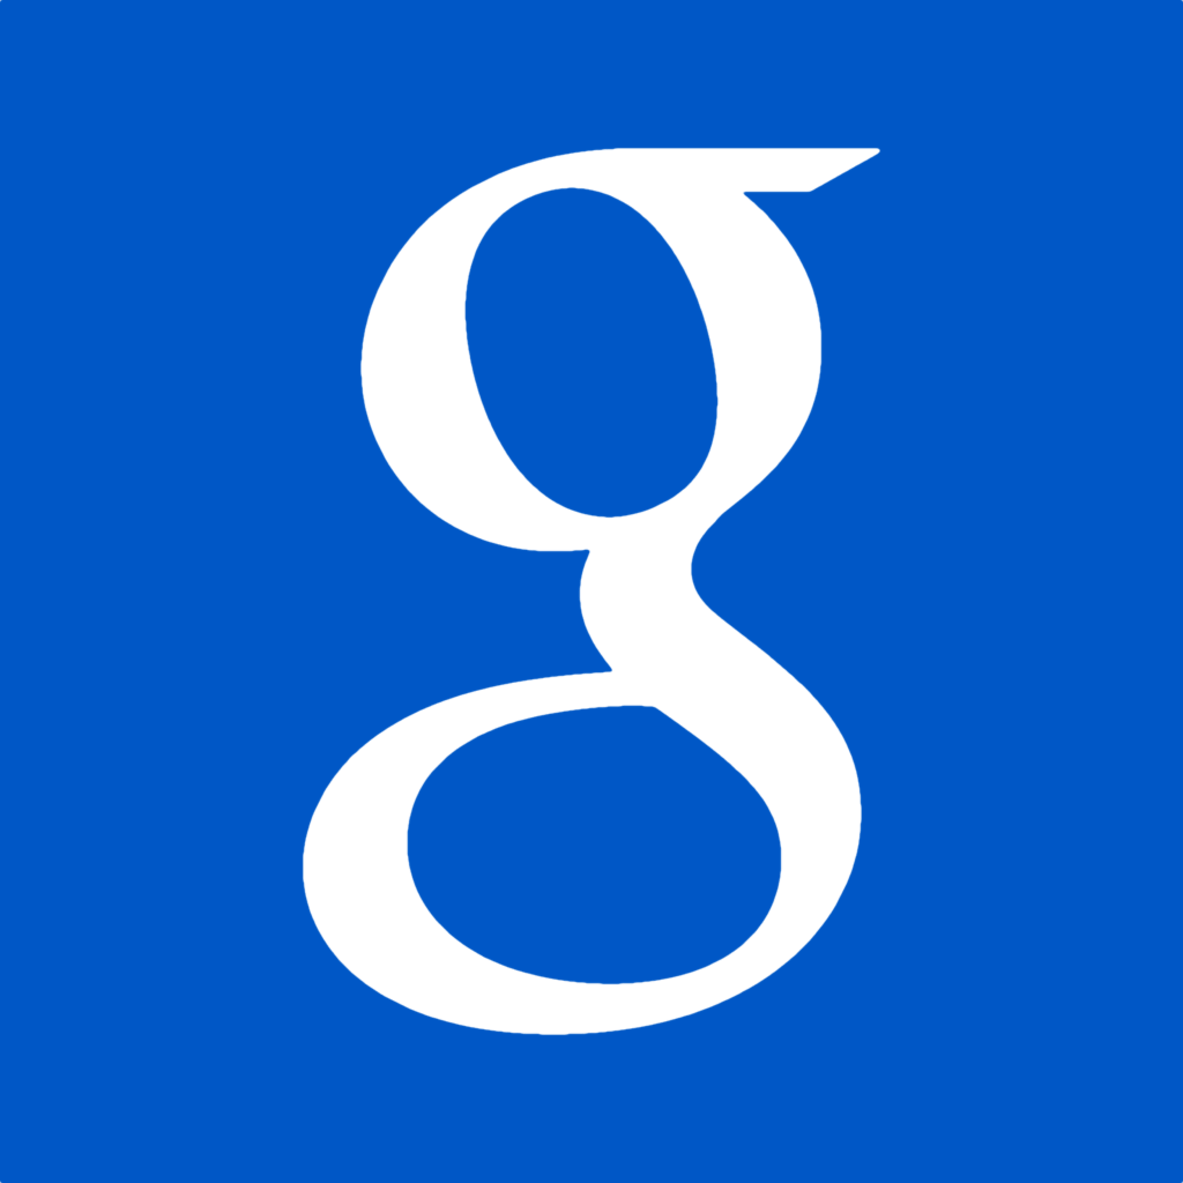 Google G Logo - Yes, Google has a new logo